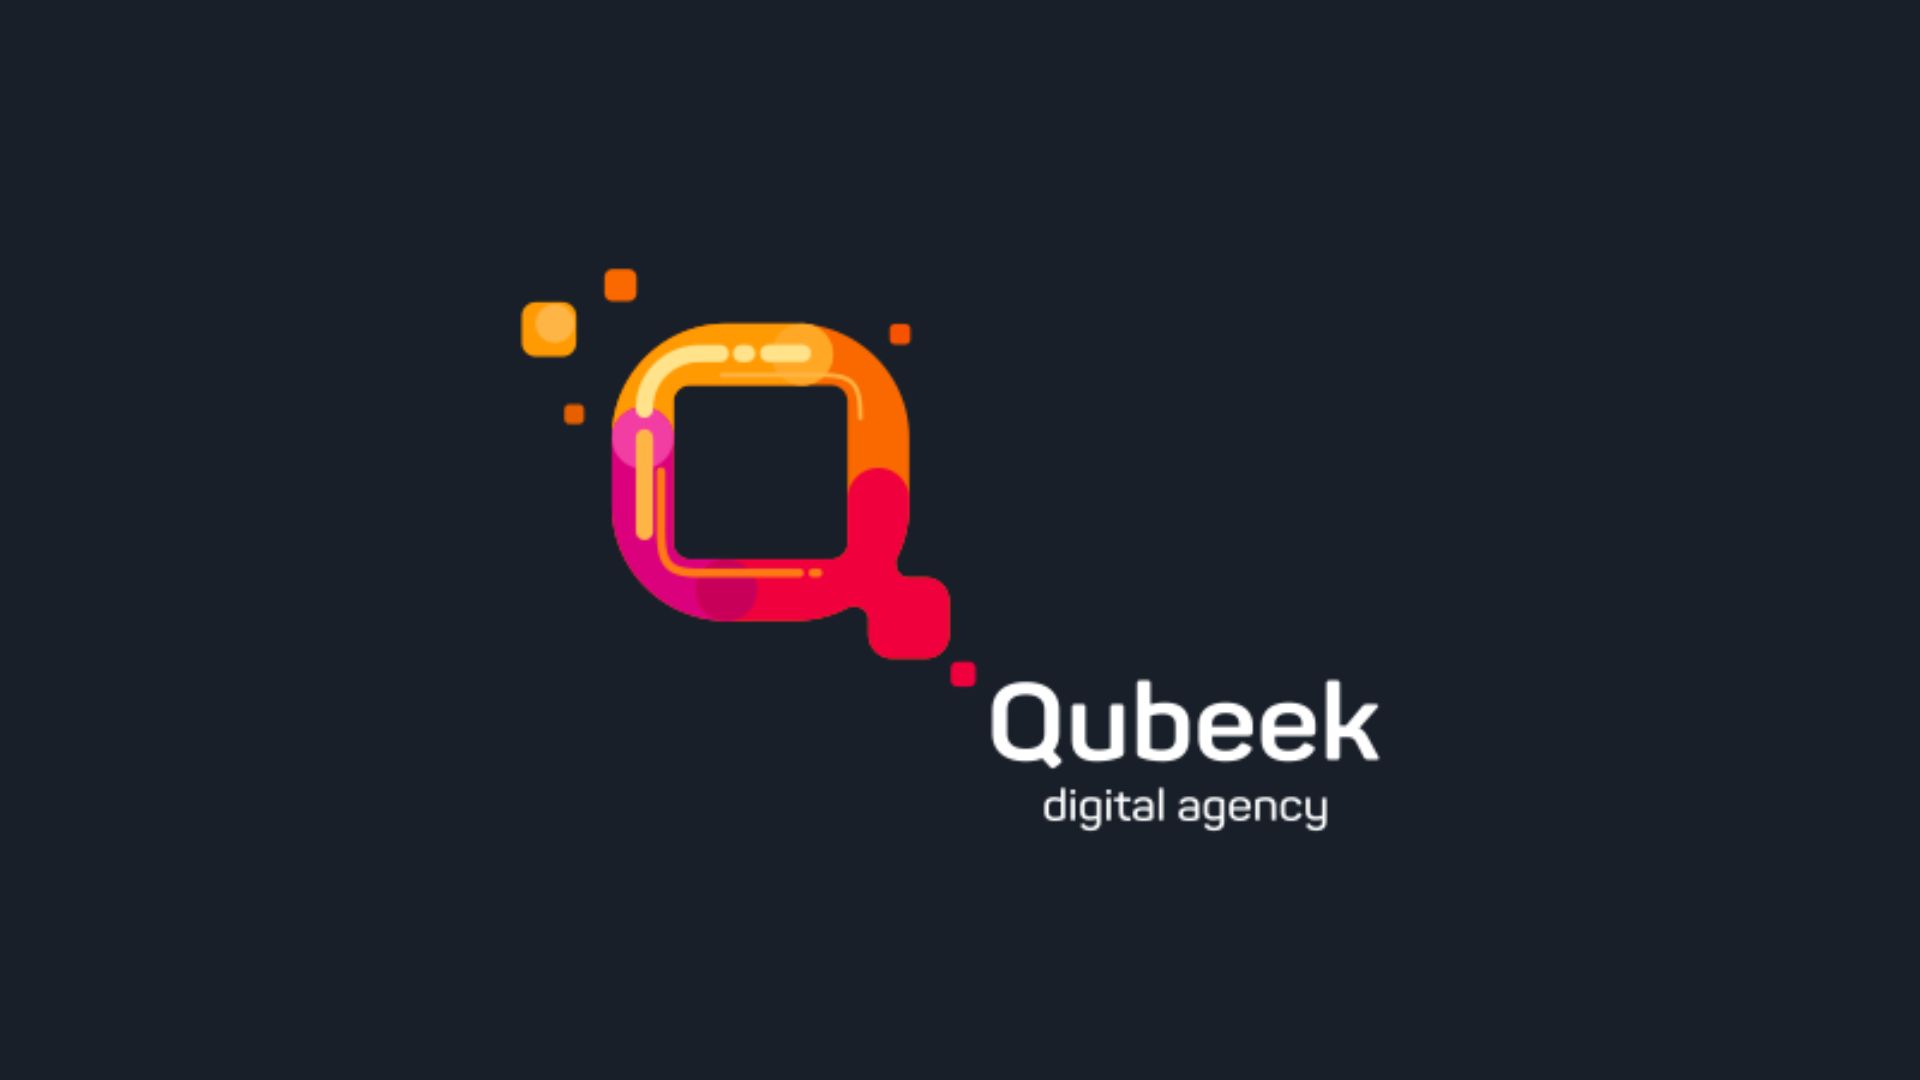 Qubeek - Revolutionizing The Way We Connect